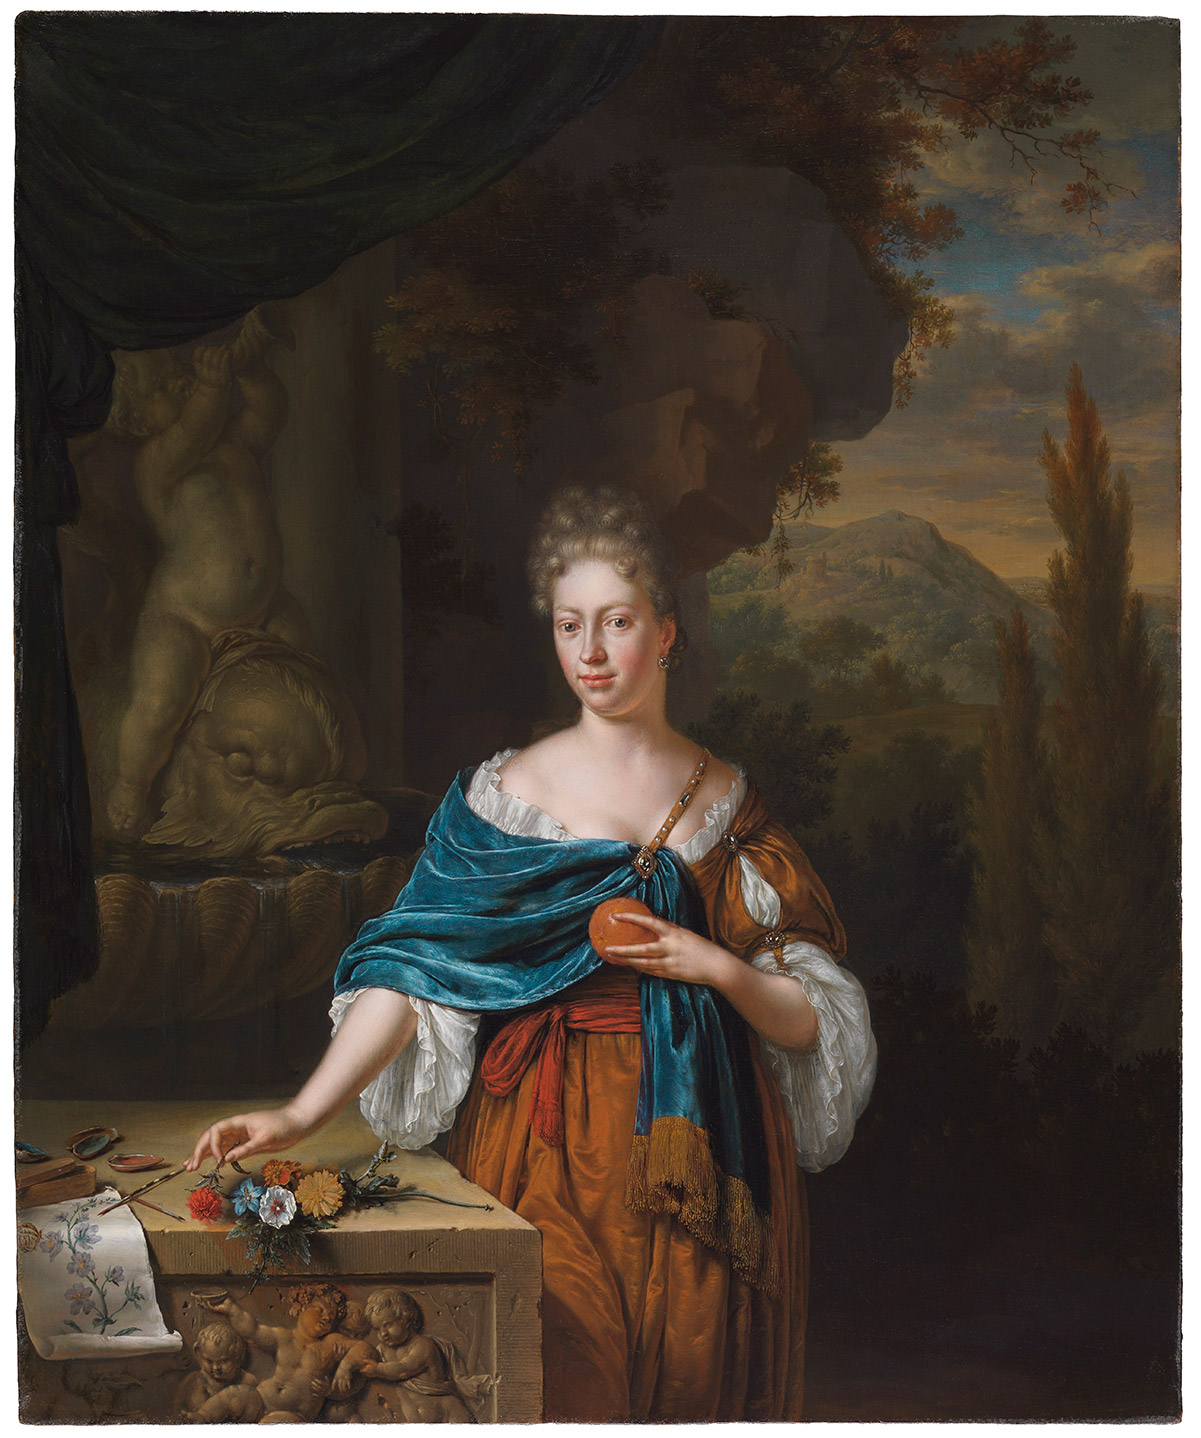 Willem van Mieris (Dutch, 1662–1747), Portrait of Dina Margareta de Bye, 1705, oil on panel, 12 3/4 × 10 1/2 in. (32.4 × 26.7 cm), The Leiden Collection, New York. Photograph courtesy of The Leiden Collection.